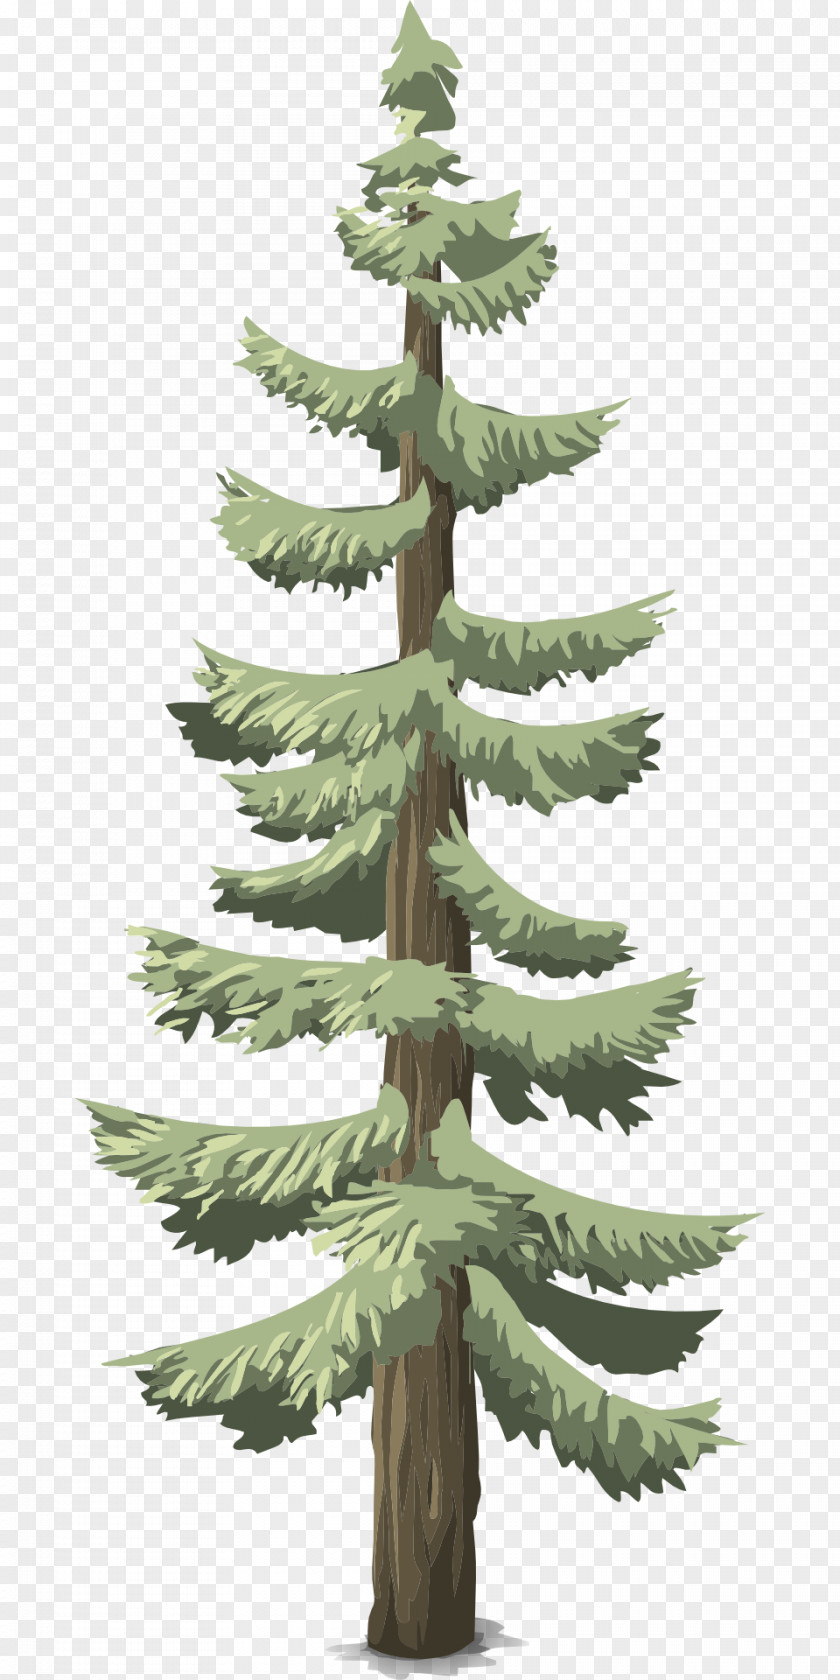 Pine Conifers Tree Conifer Cone Evergreen PNG